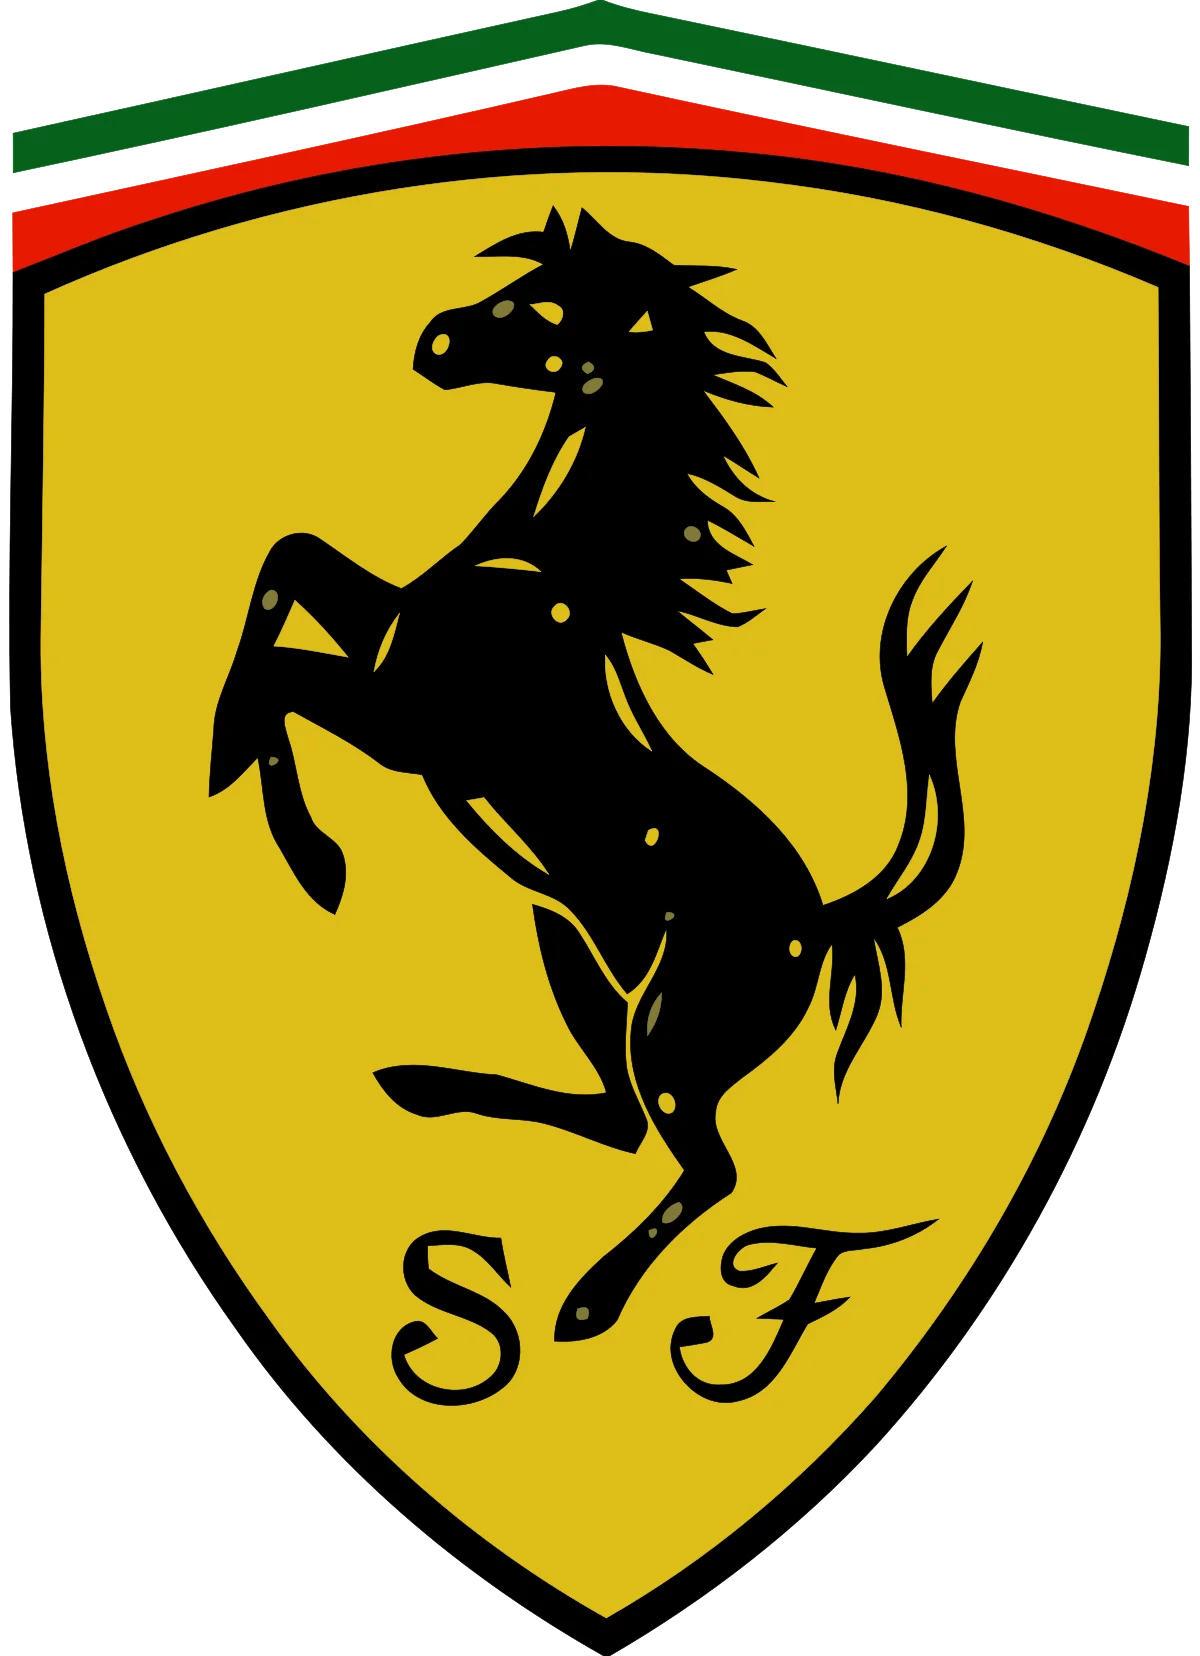 Logo de la marque de voiture Ferrari